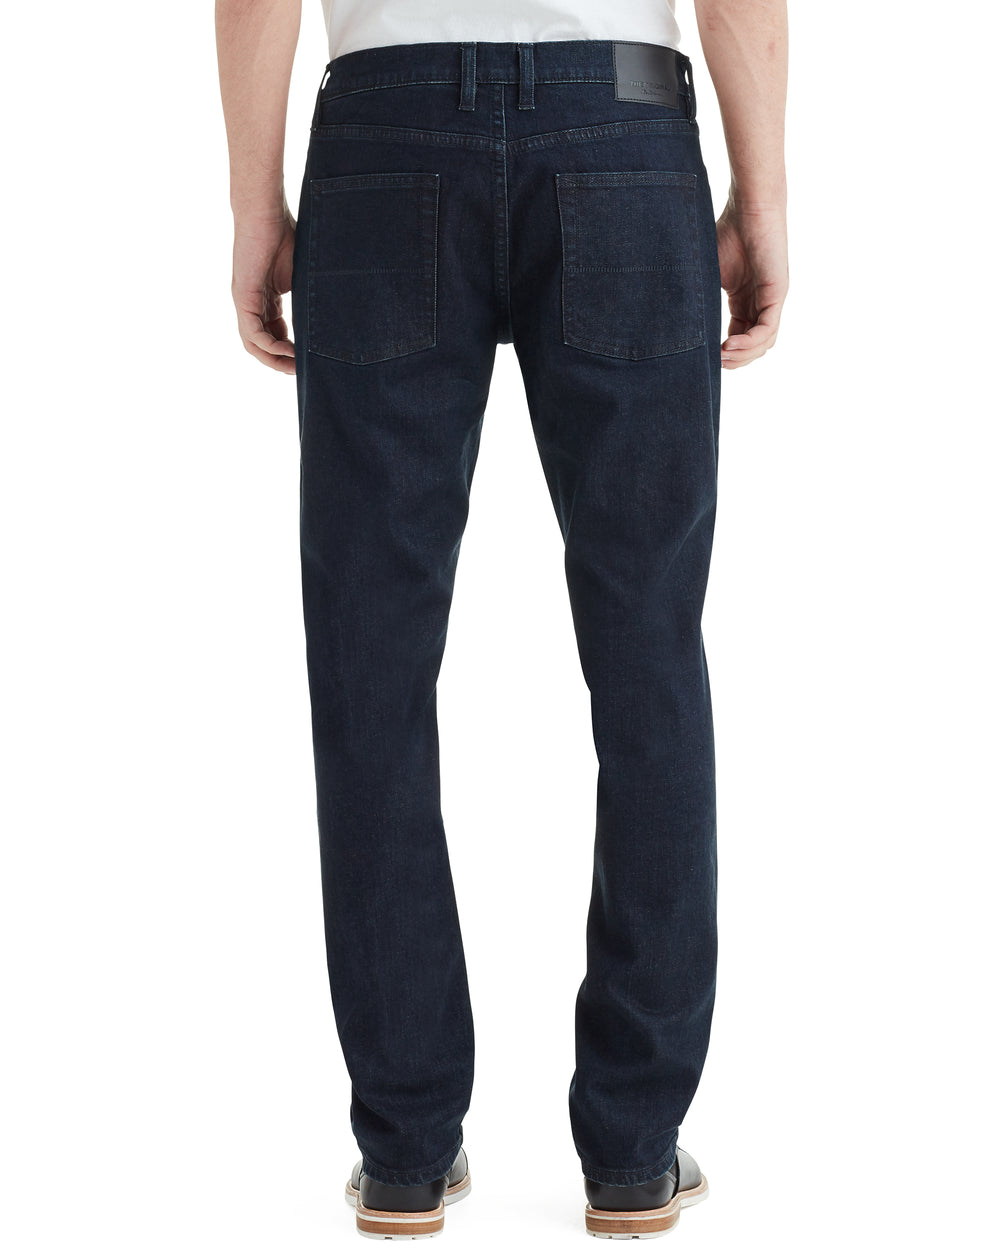 Men's Slim Fit Jeans, 32 Inseam - Dark Rinse